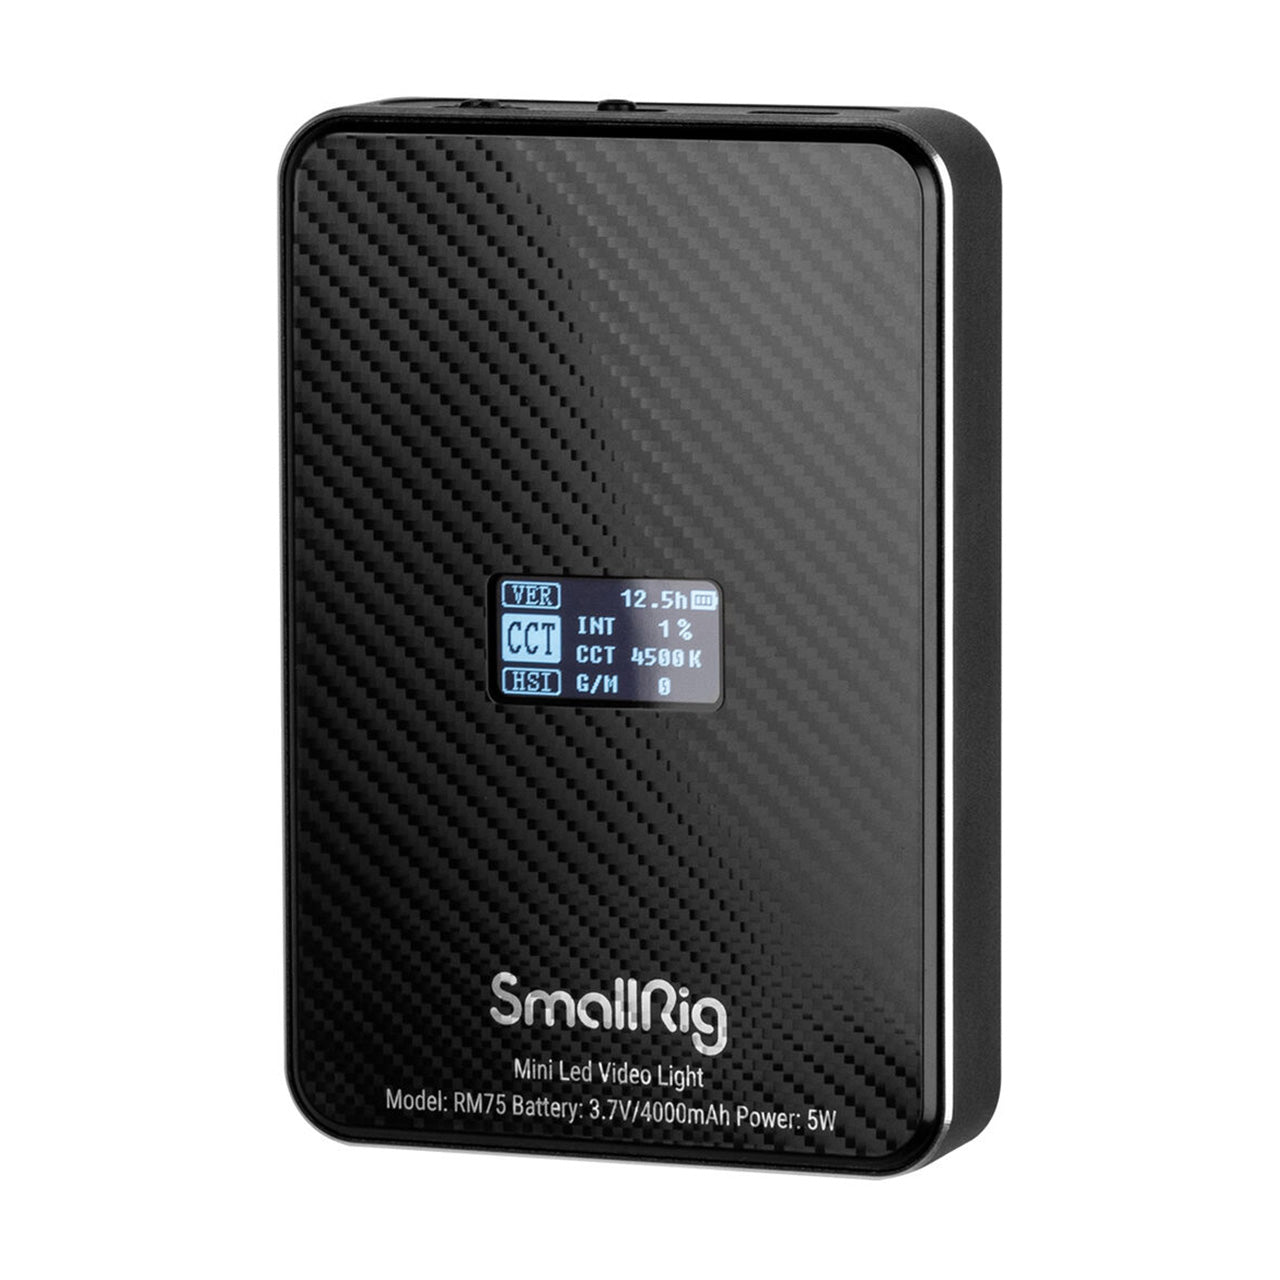 SmallRig RM75 Magnetic Smart LED Video Light 2500-8500K On-Camera RGB Light 4000mAh with Custom Light Effects (3290)